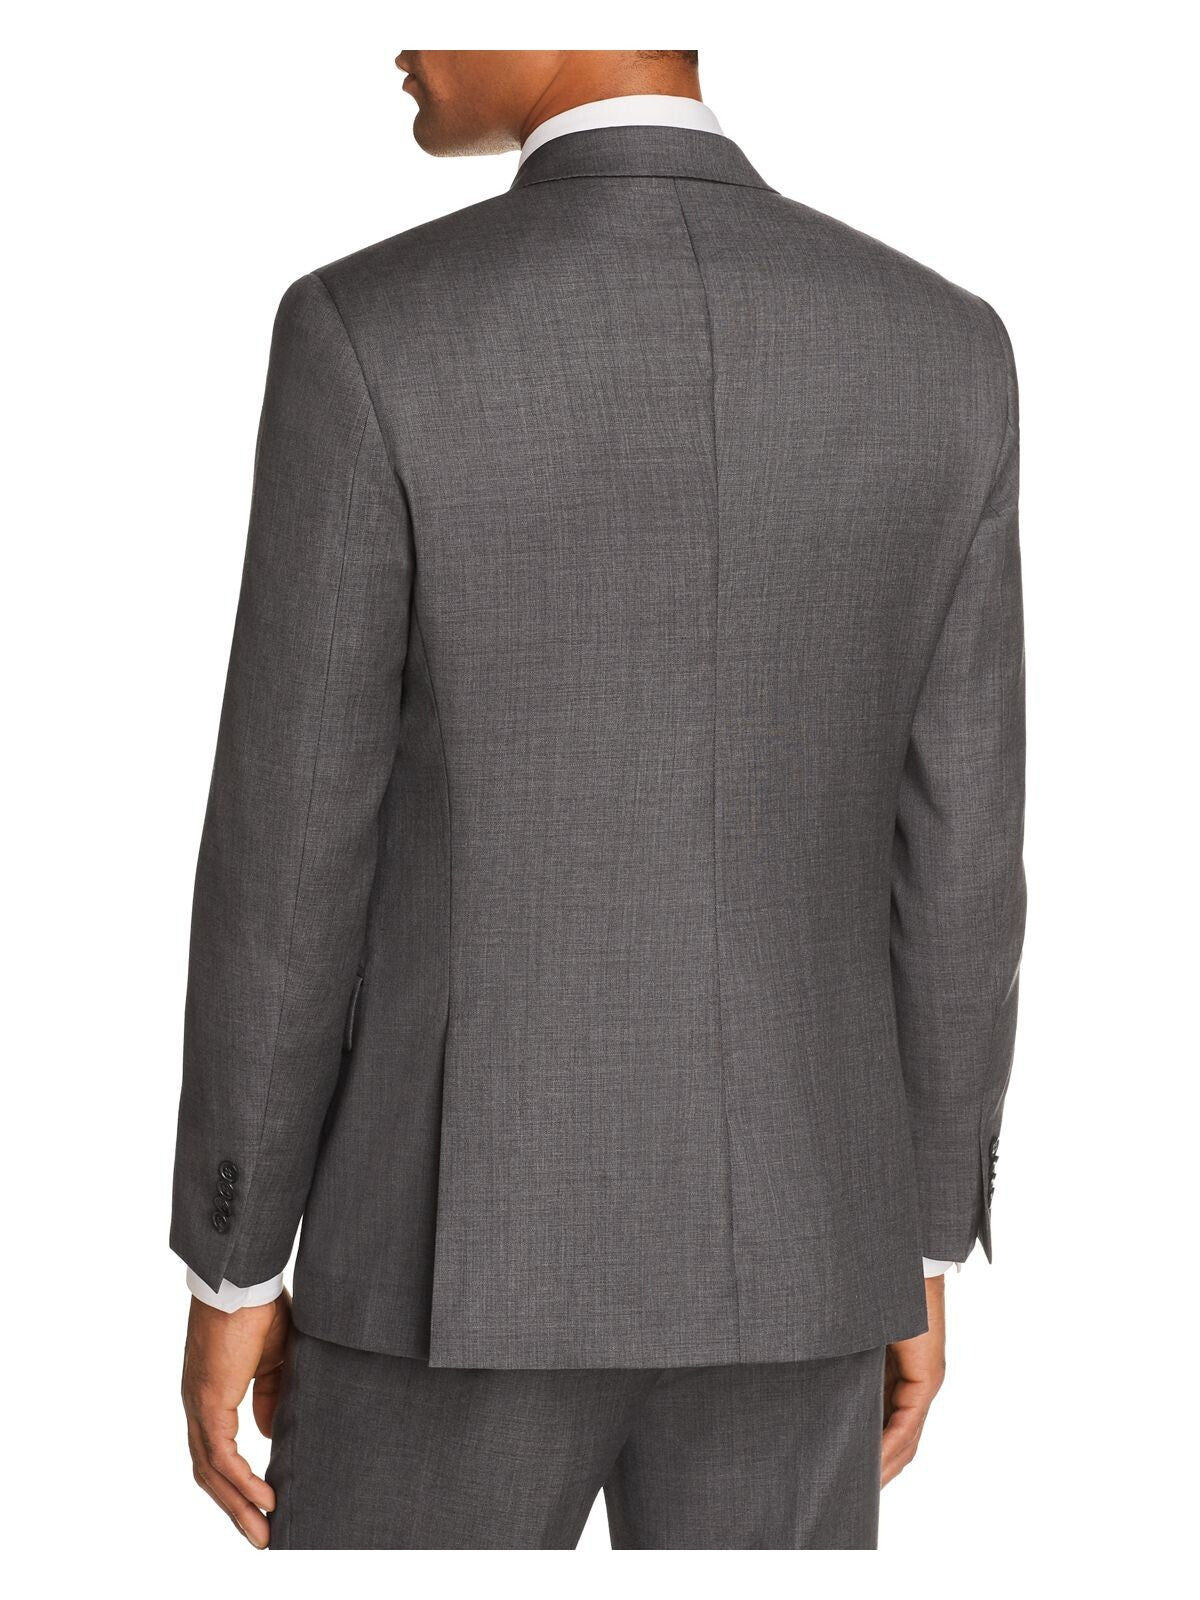 MICHAEL KORS Mens Sharkskin Gray Single Breasted, Classic Fit Wool Blend Blazer 36S